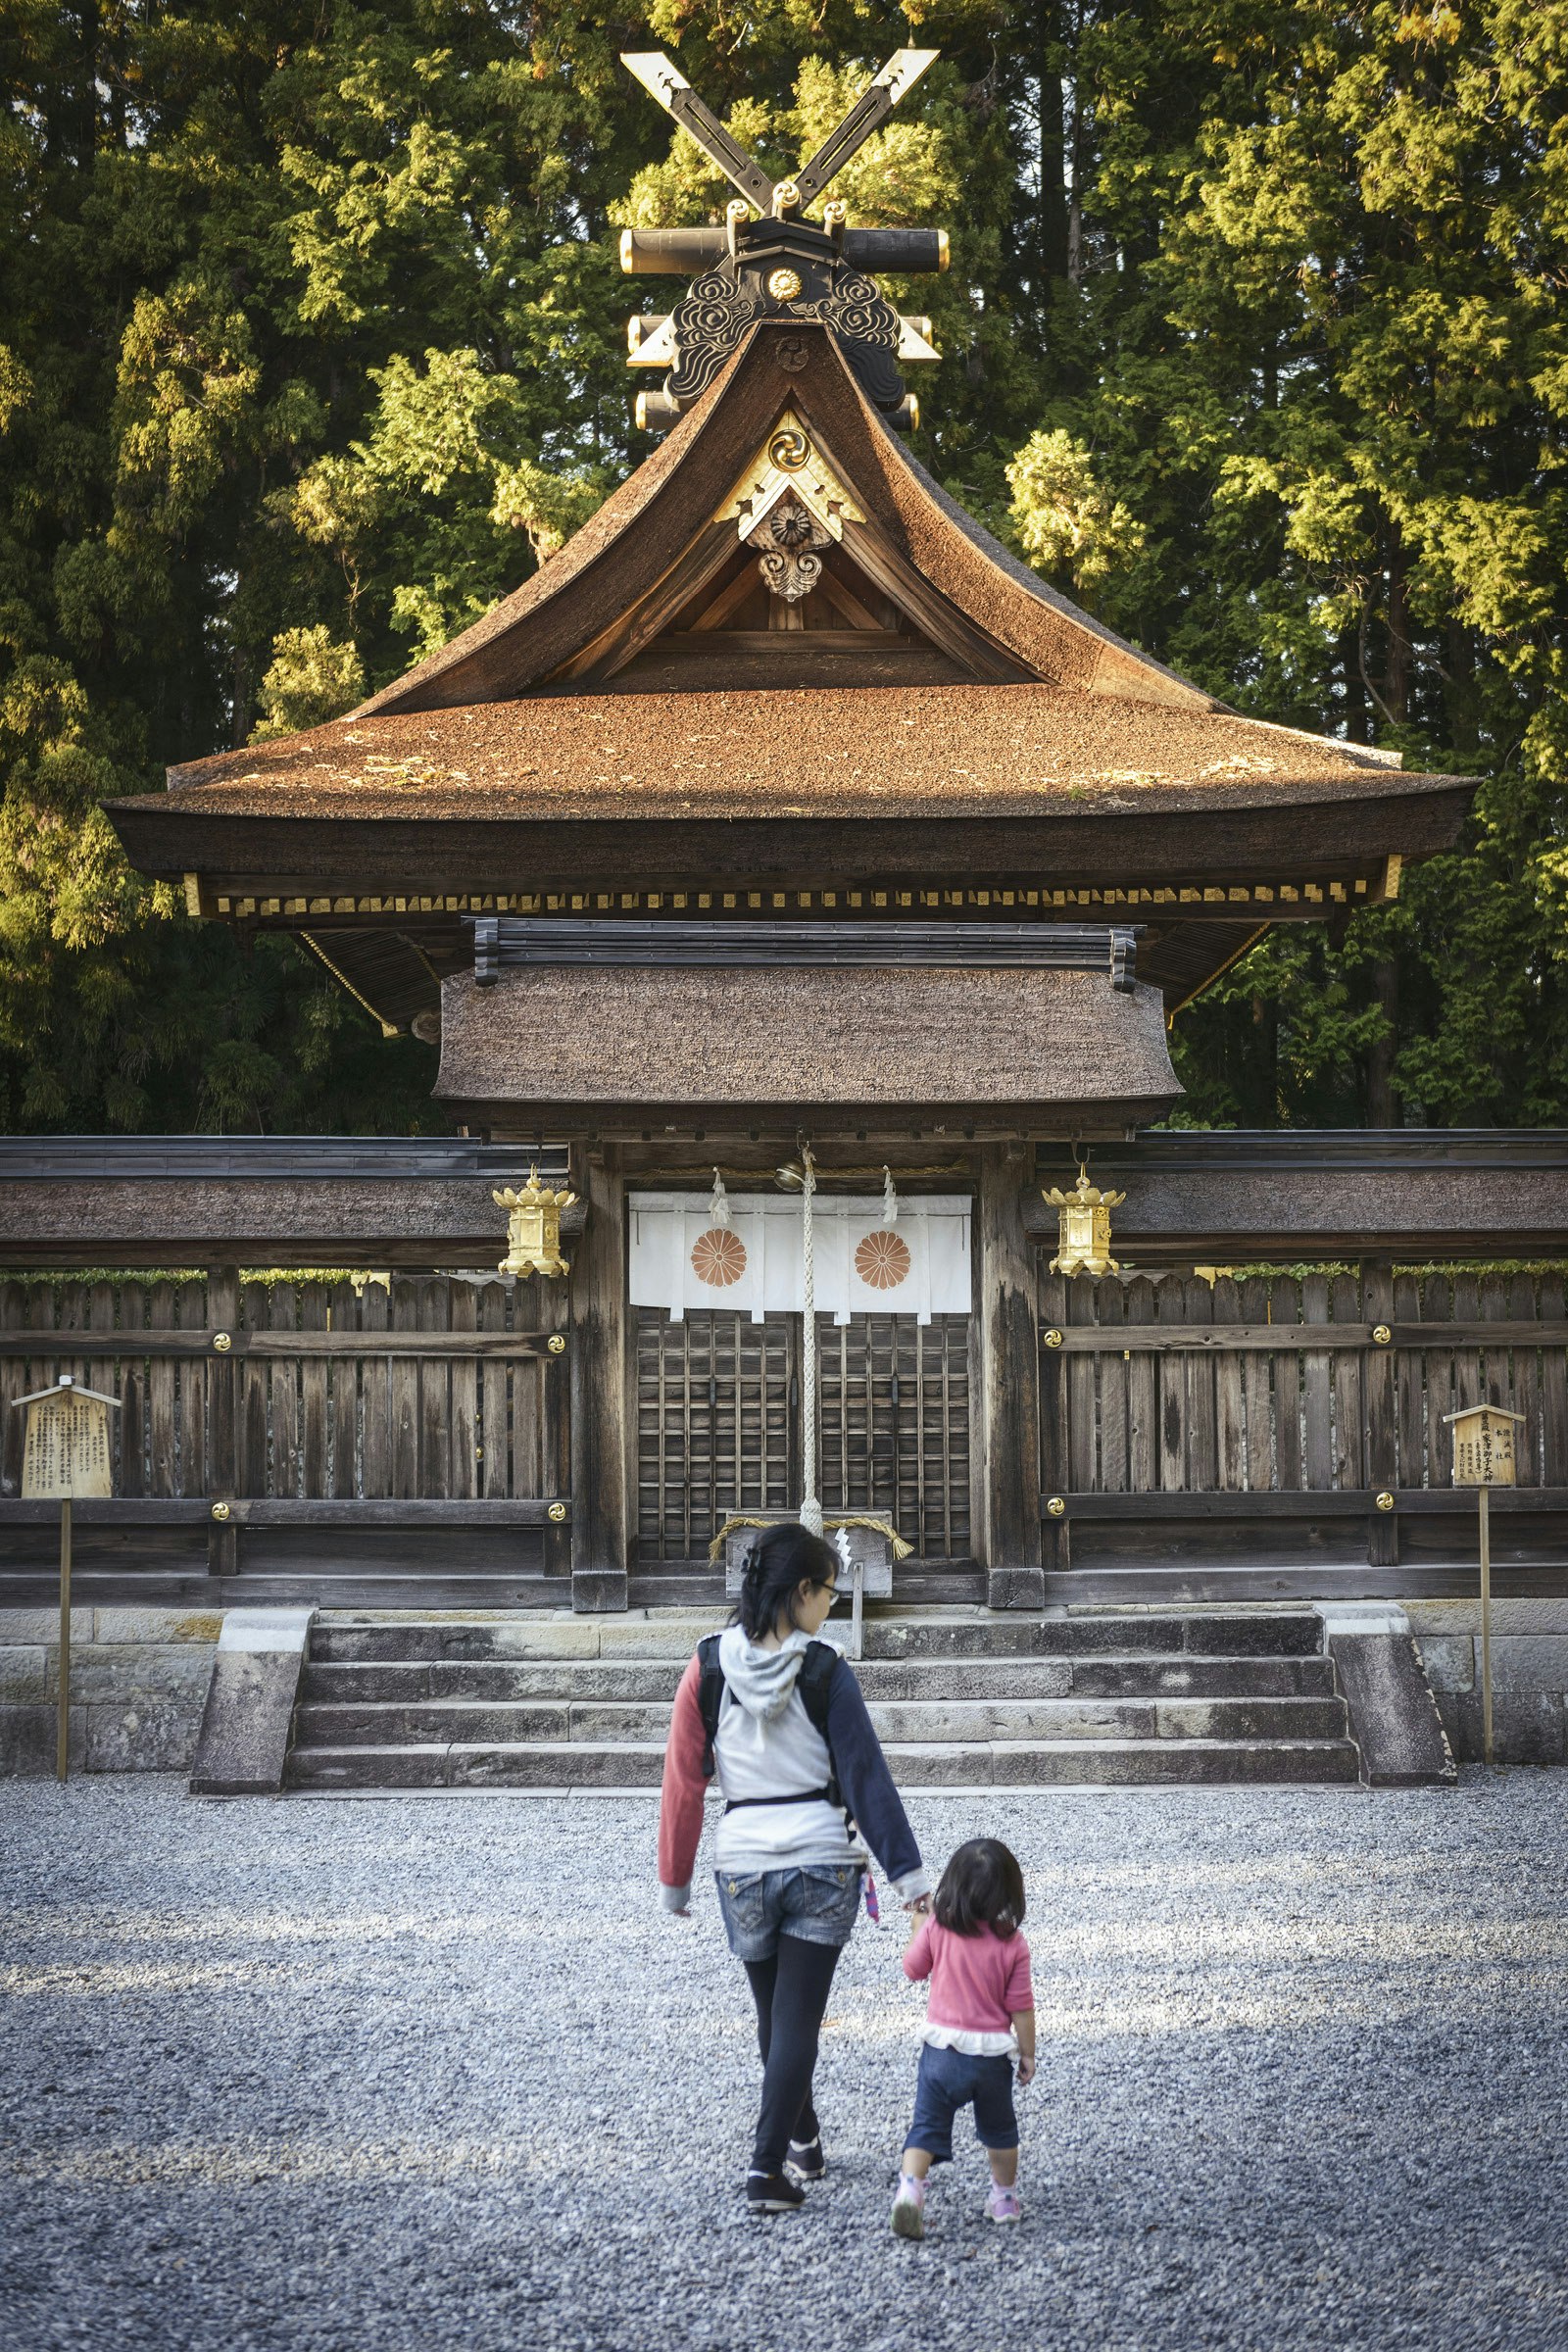 Hongū Taisha is a classic example of Shinto shrine architecture